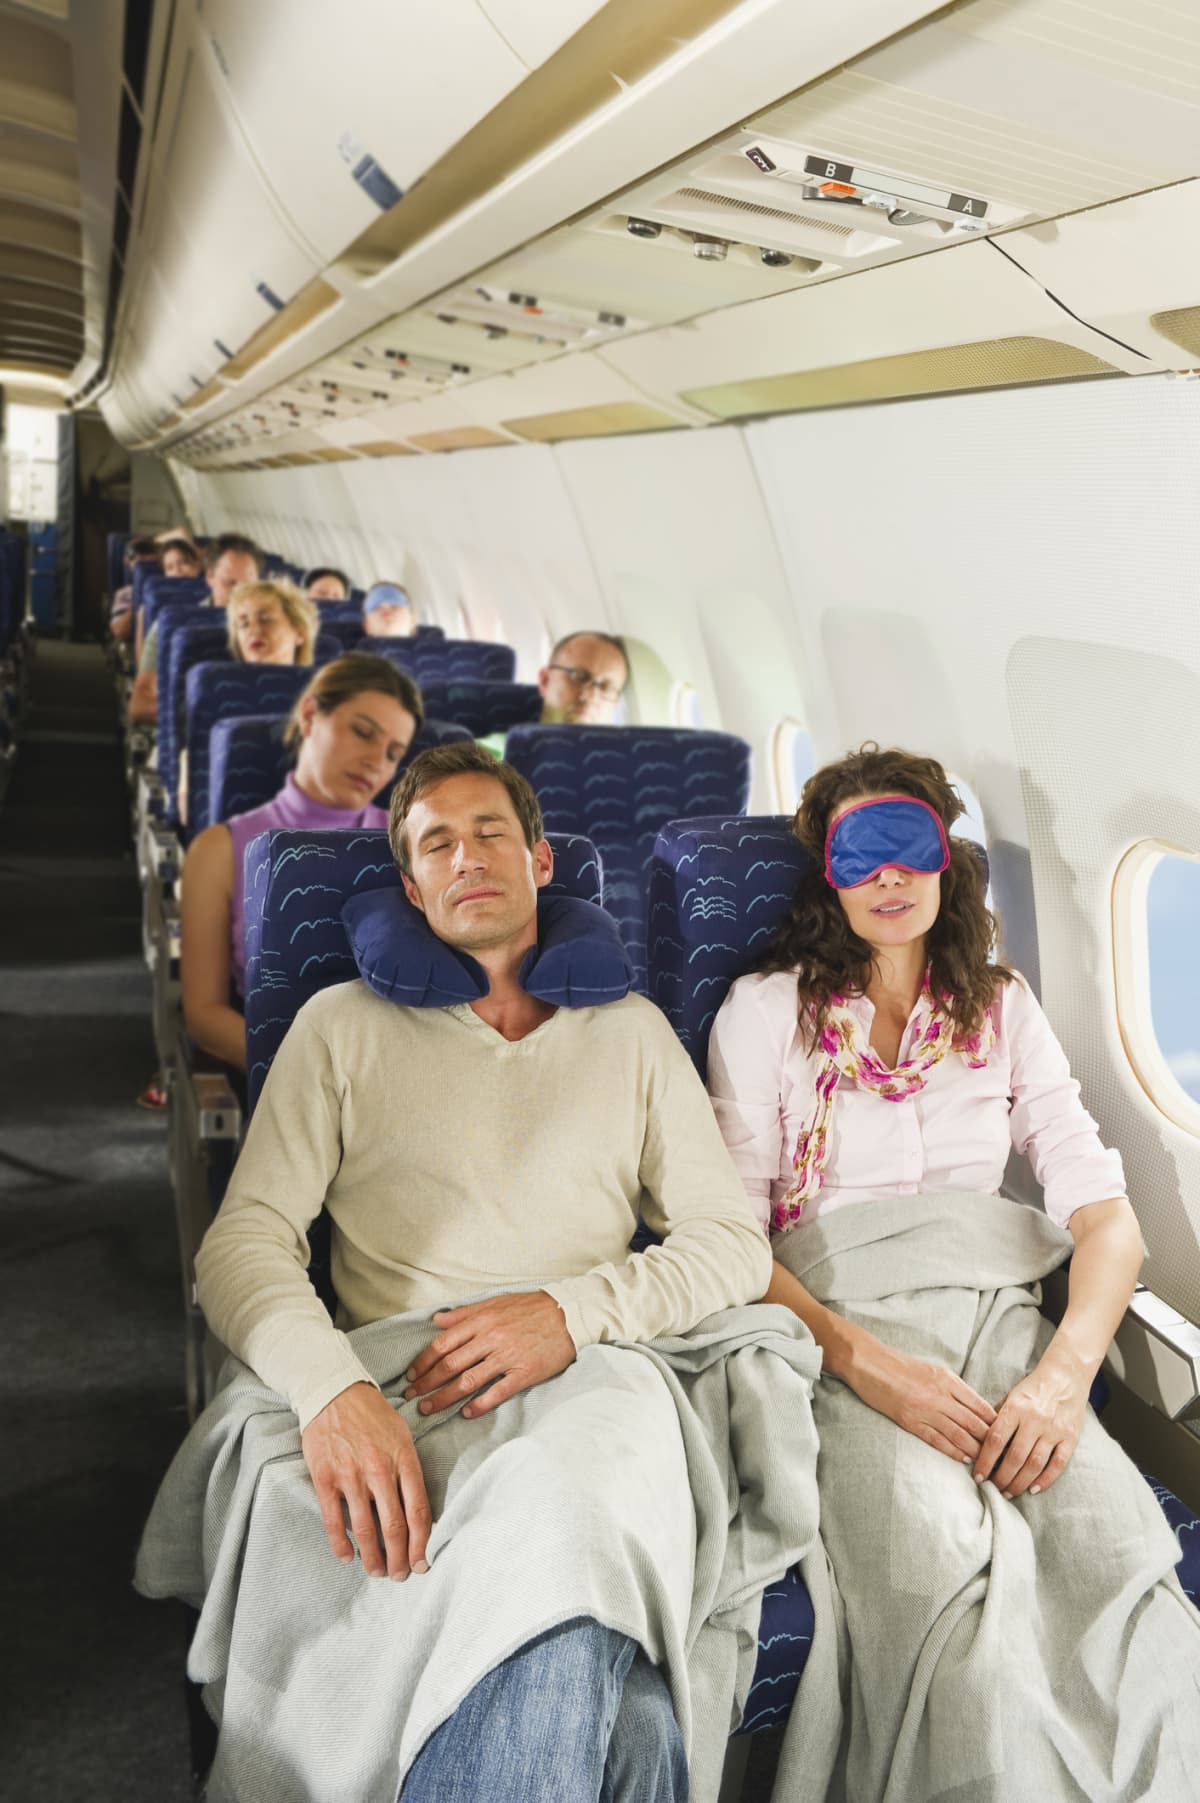 Passengers resting on a plane